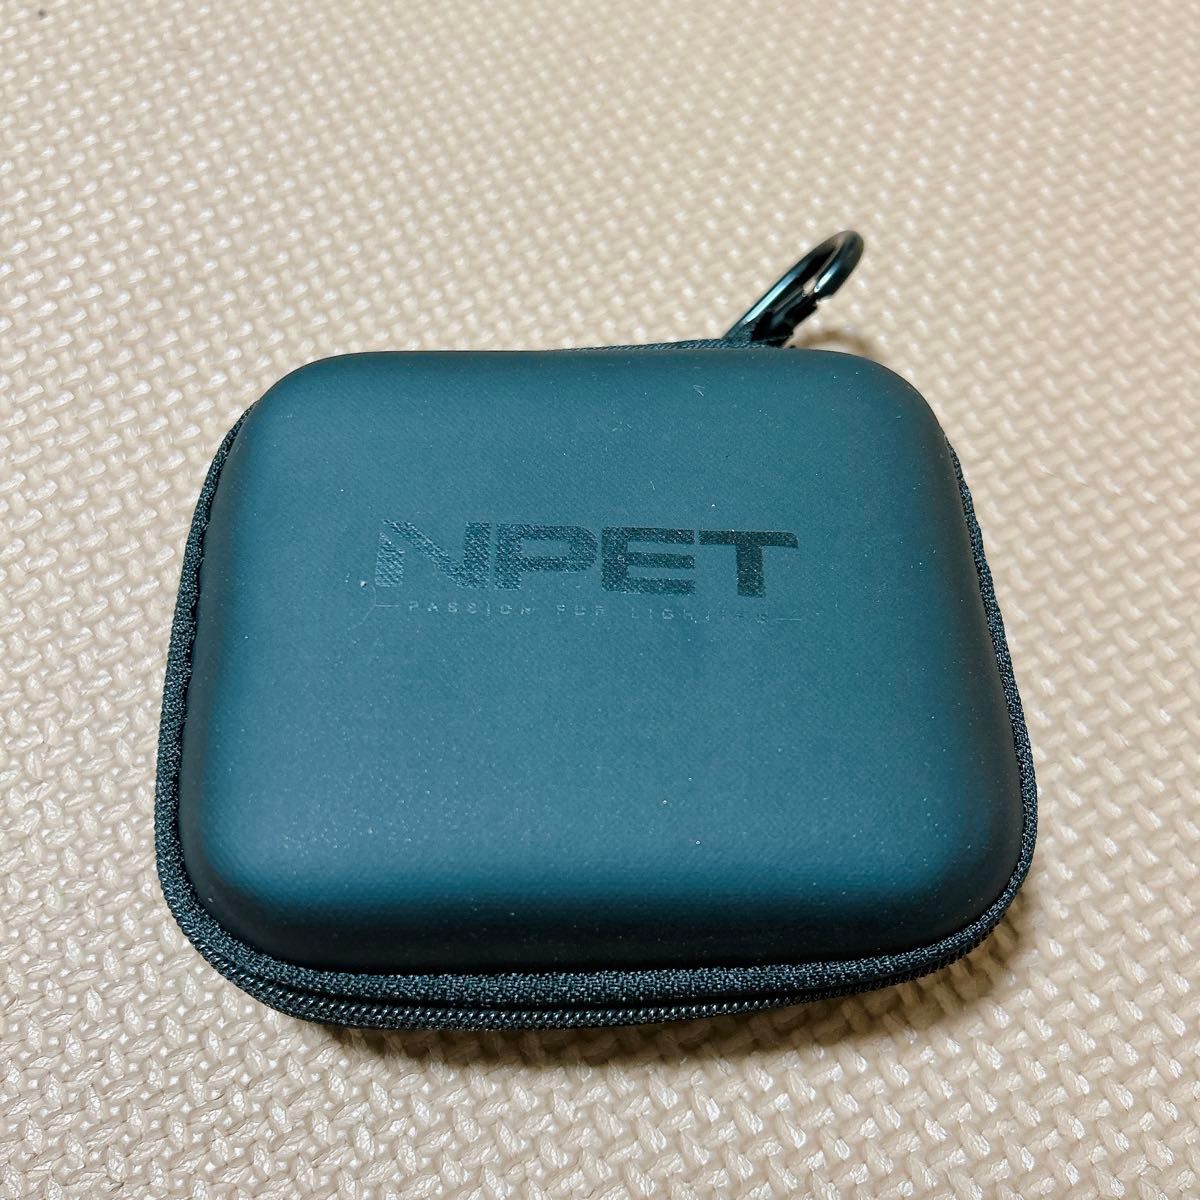 NPET LED ヘッドライト USB充電式 高輝度 超軽量 強力 小型 1100ルーメン明るい 6モード SOS点滅 